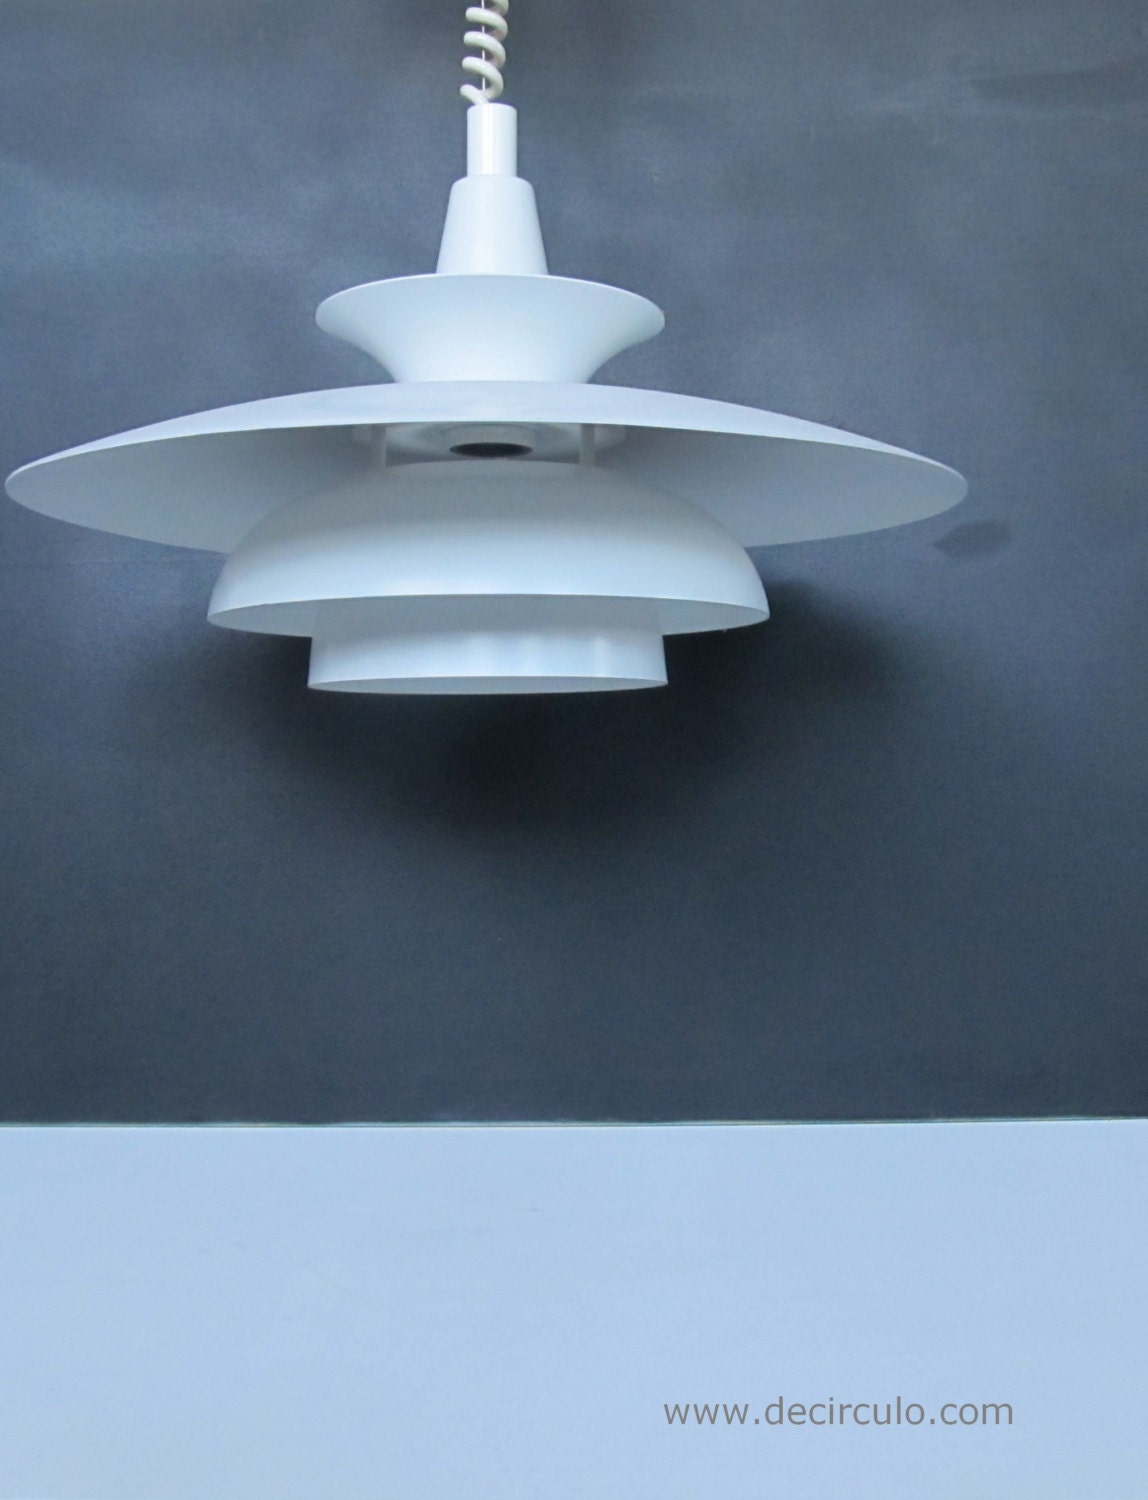 Abo Randers Deense designlamp, groot Scandinavisch wit designlampje